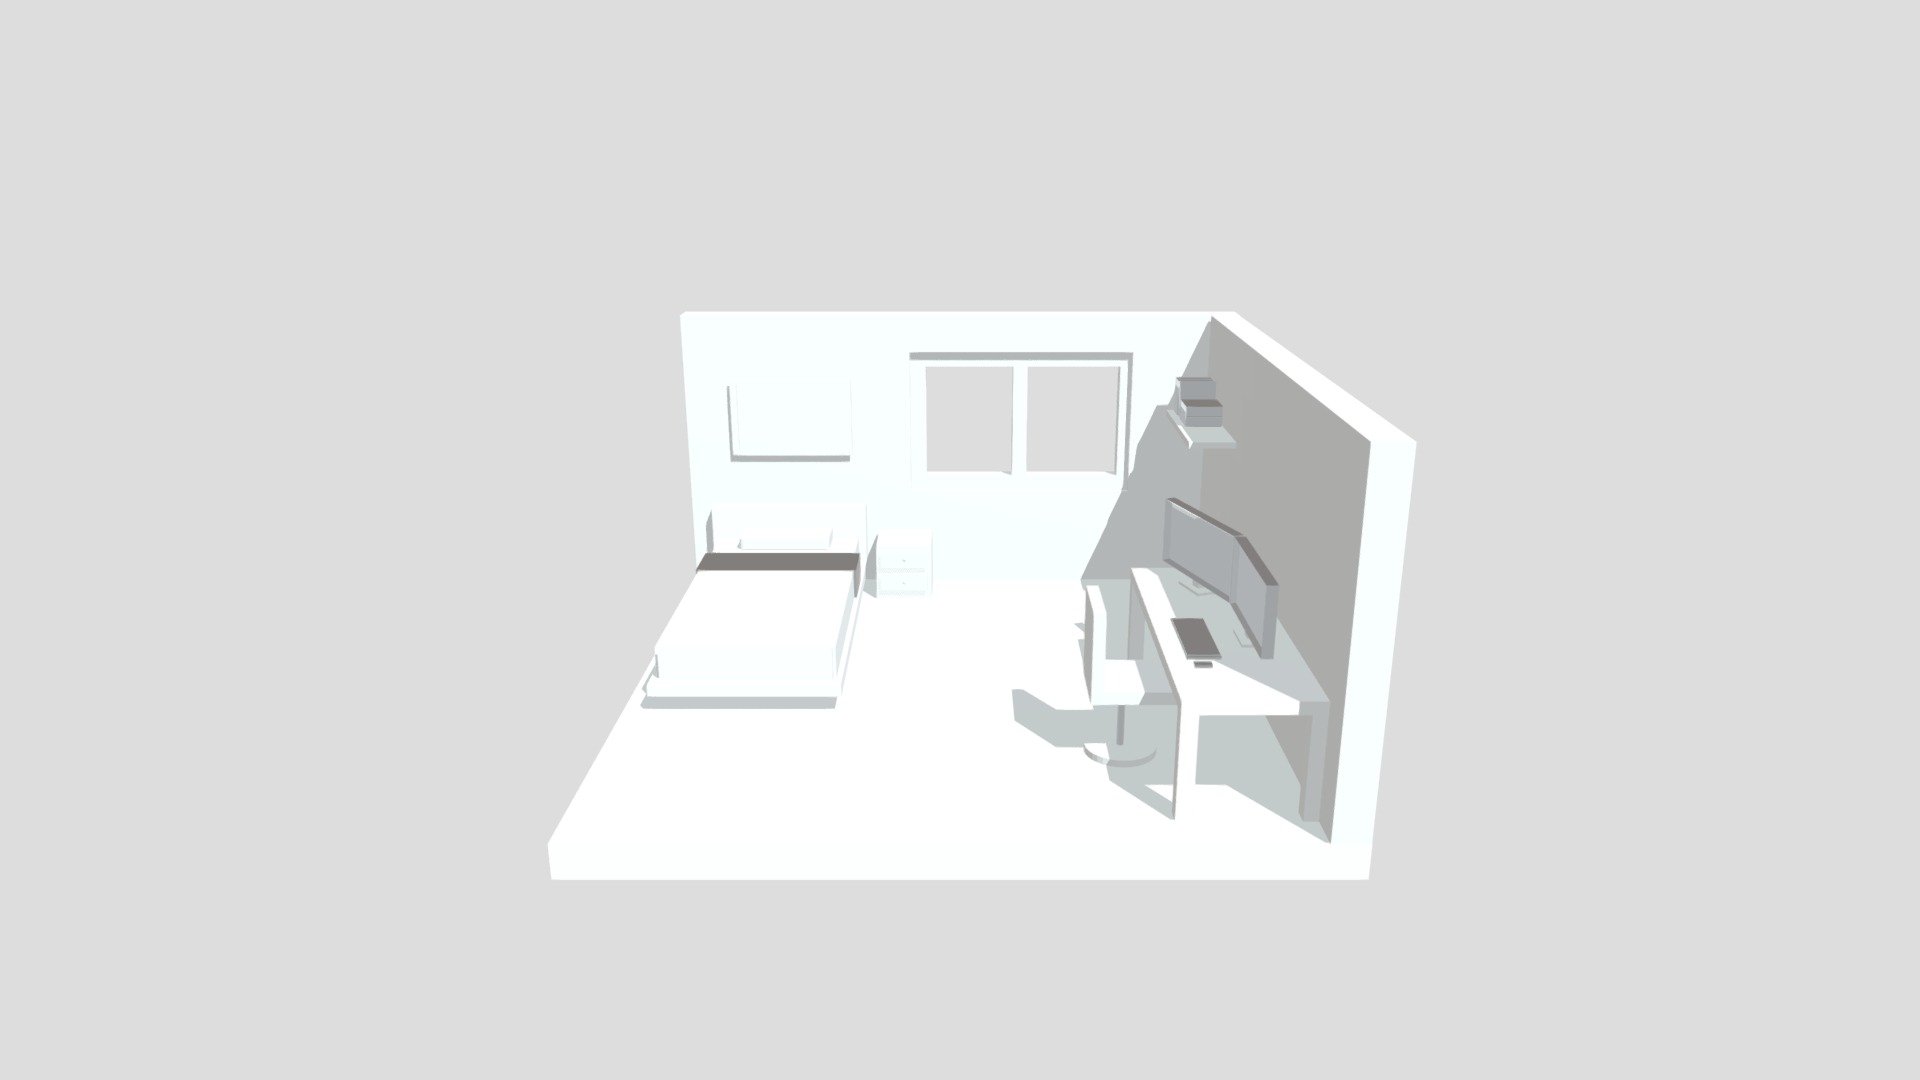 LowPoly Bedroom interior model for Blender/Unity